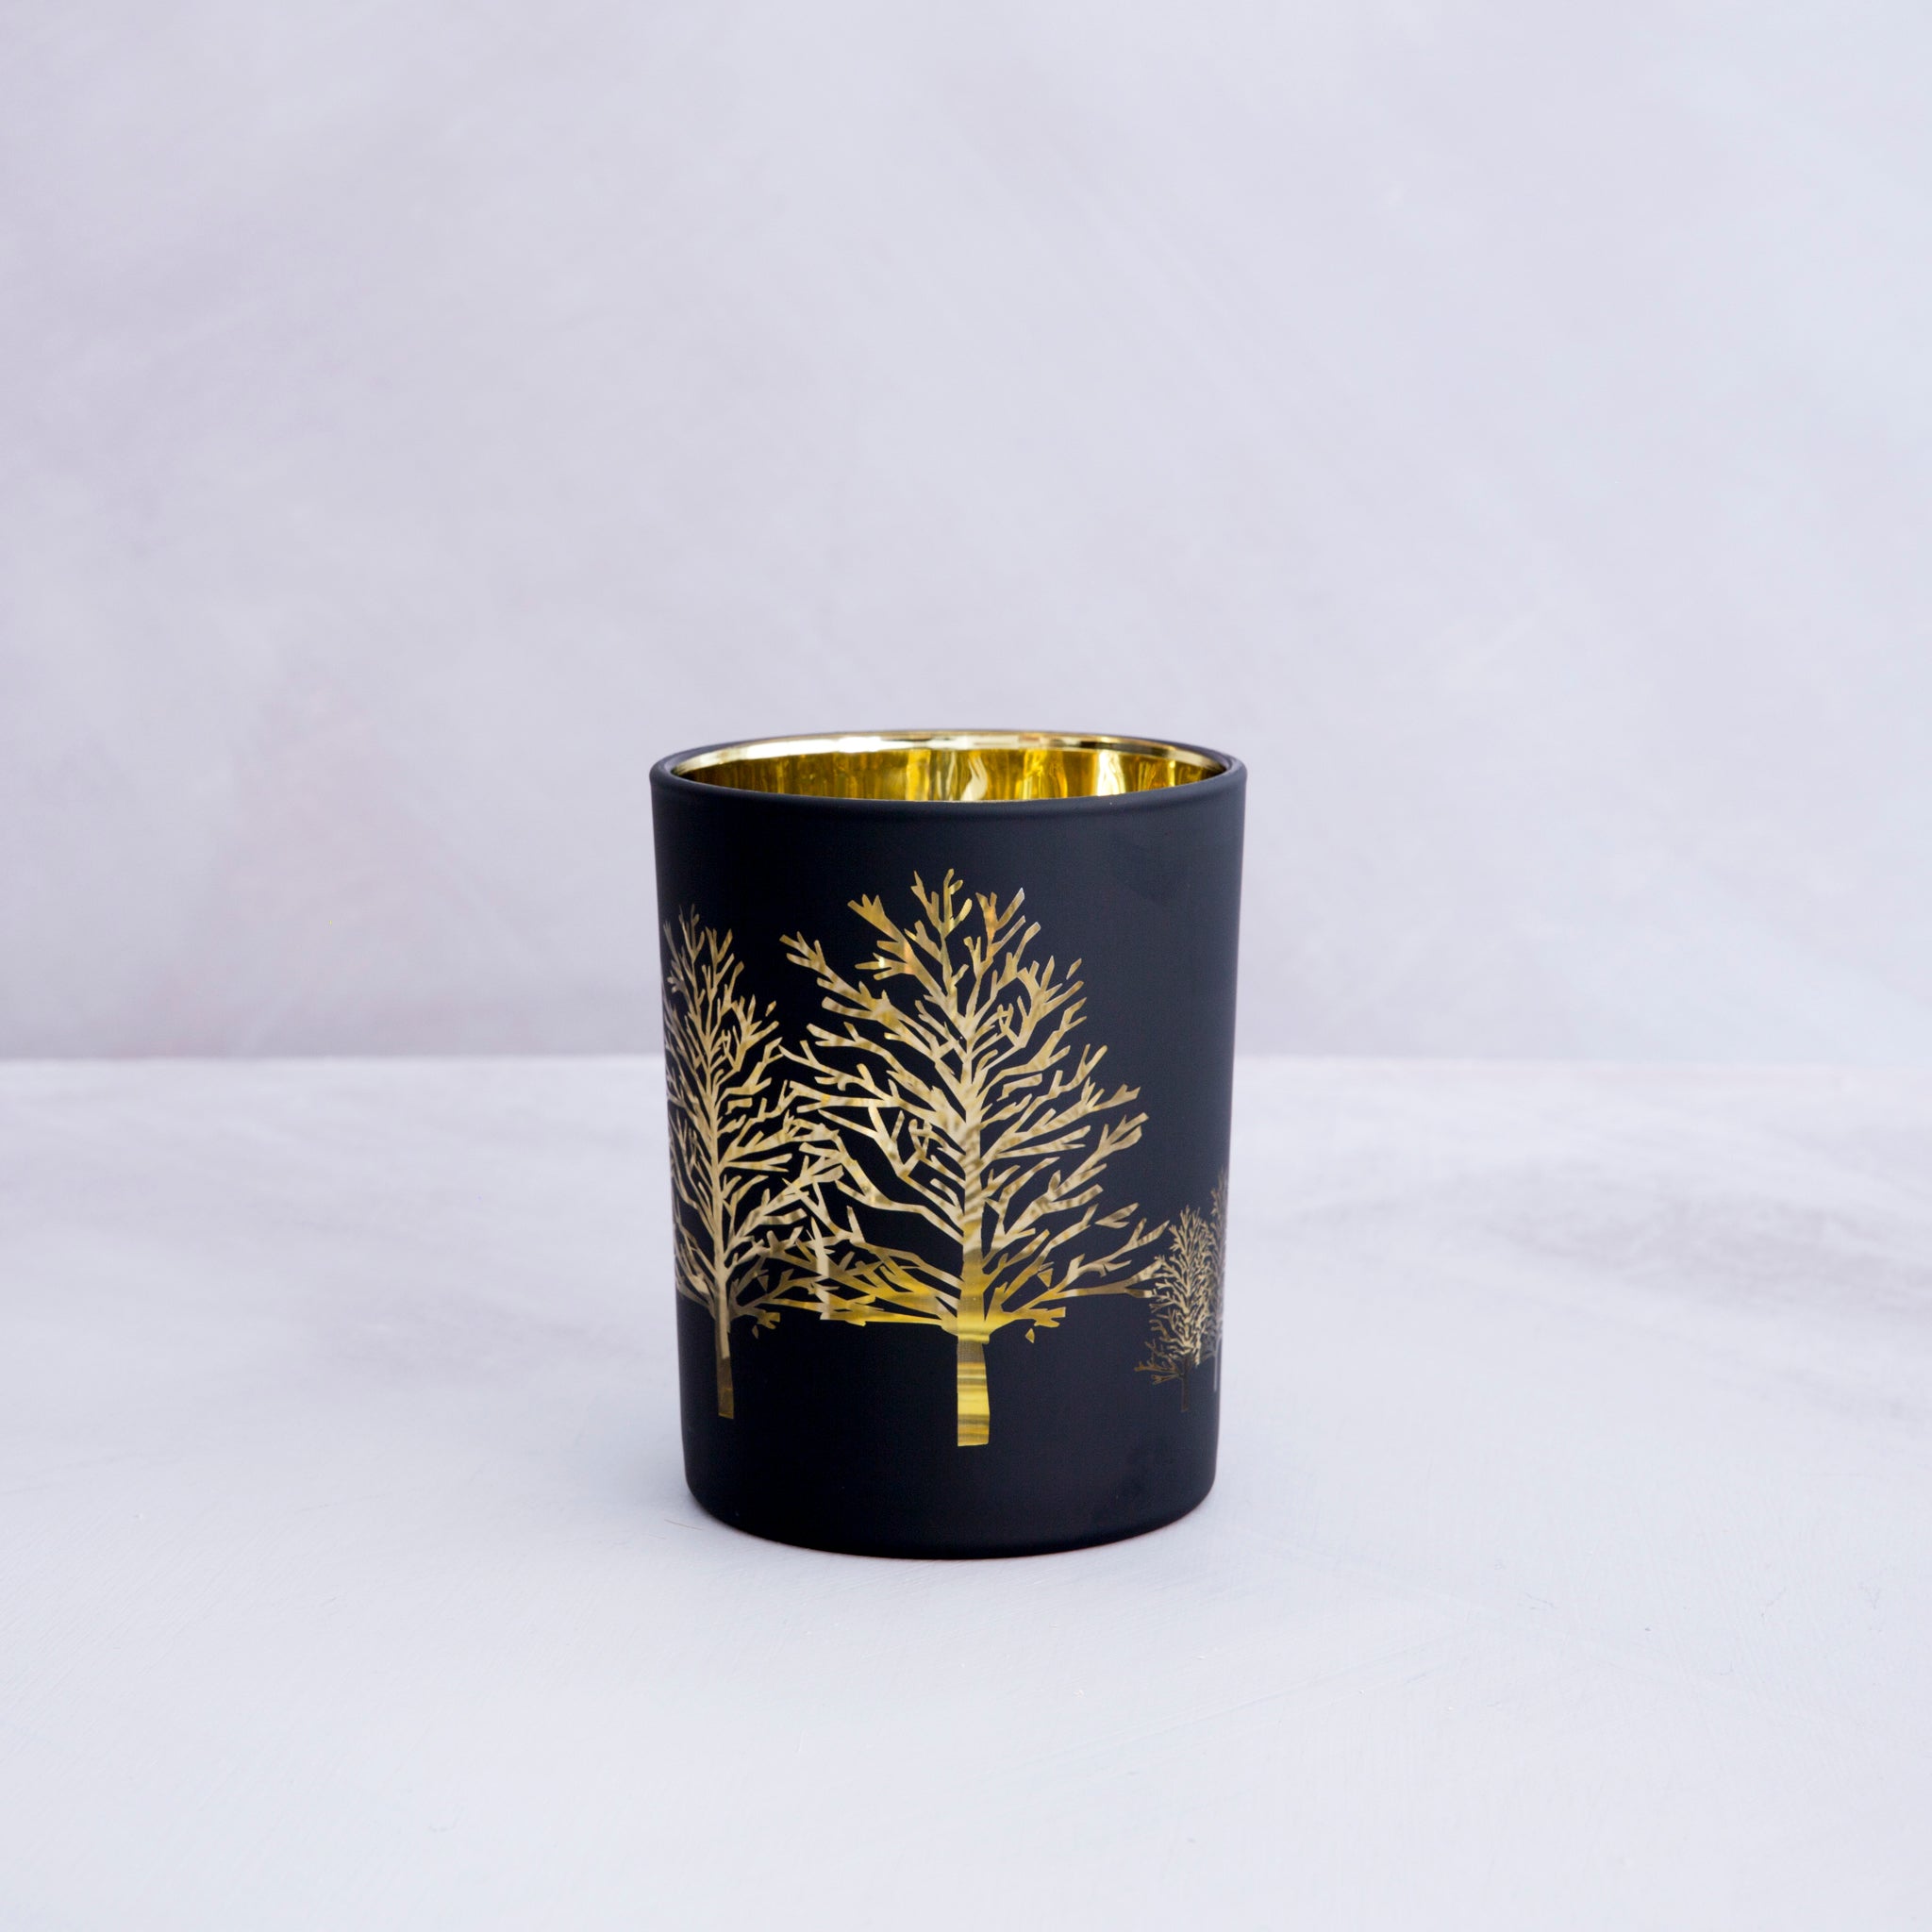 Tree Tealight Holder - The Nancy Smillie Shop - Art, Jewellery & Designer Gifts Glasgow